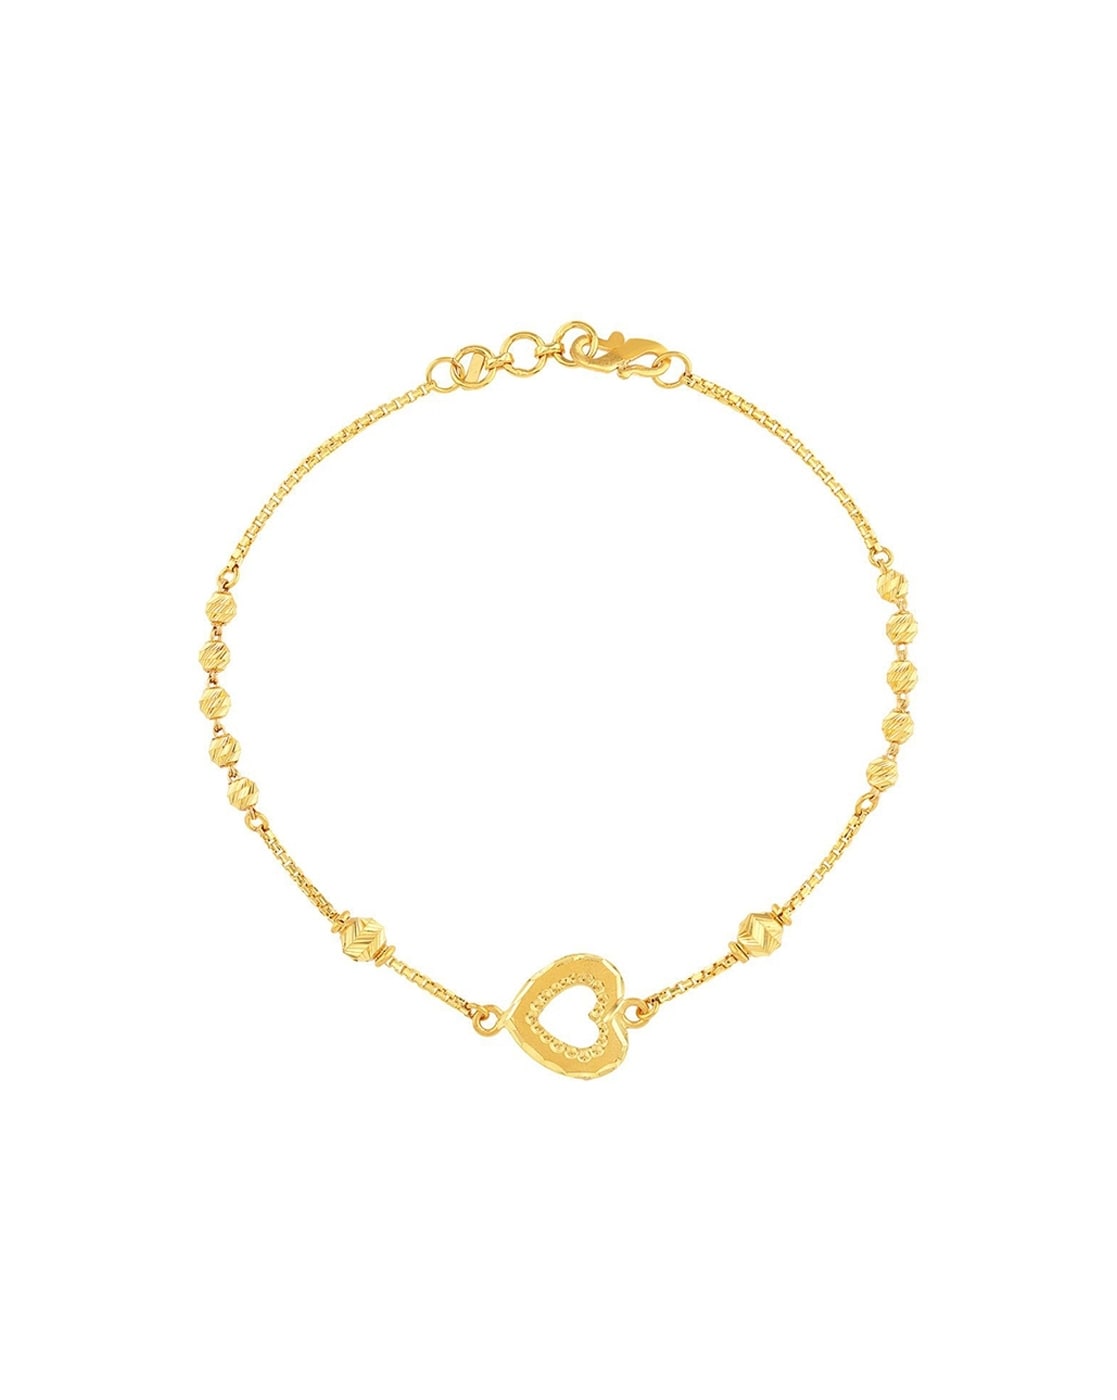 Malabar 22 KT Gold Studded Charms Bracelet BRDZSKY101 | Bridal gold  jewellery designs, Bridal gold jewellery, Gold